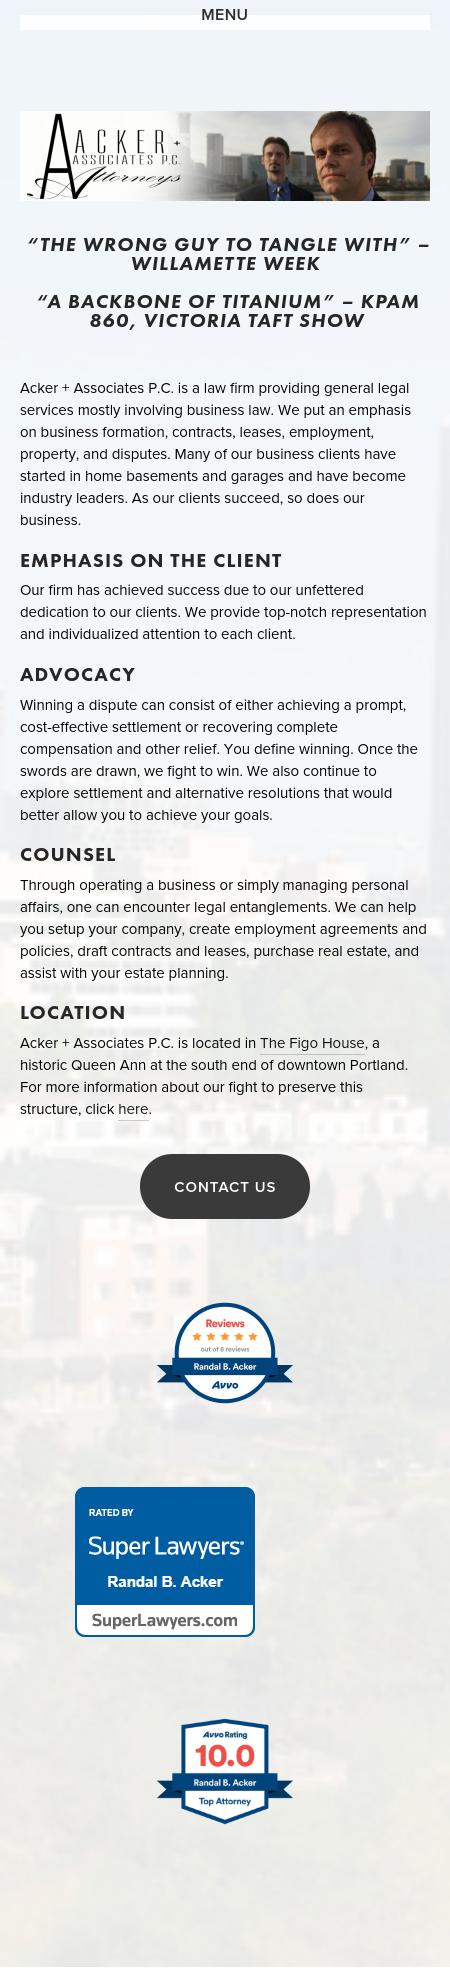 Acker & Associates PC - Portland OR Lawyers